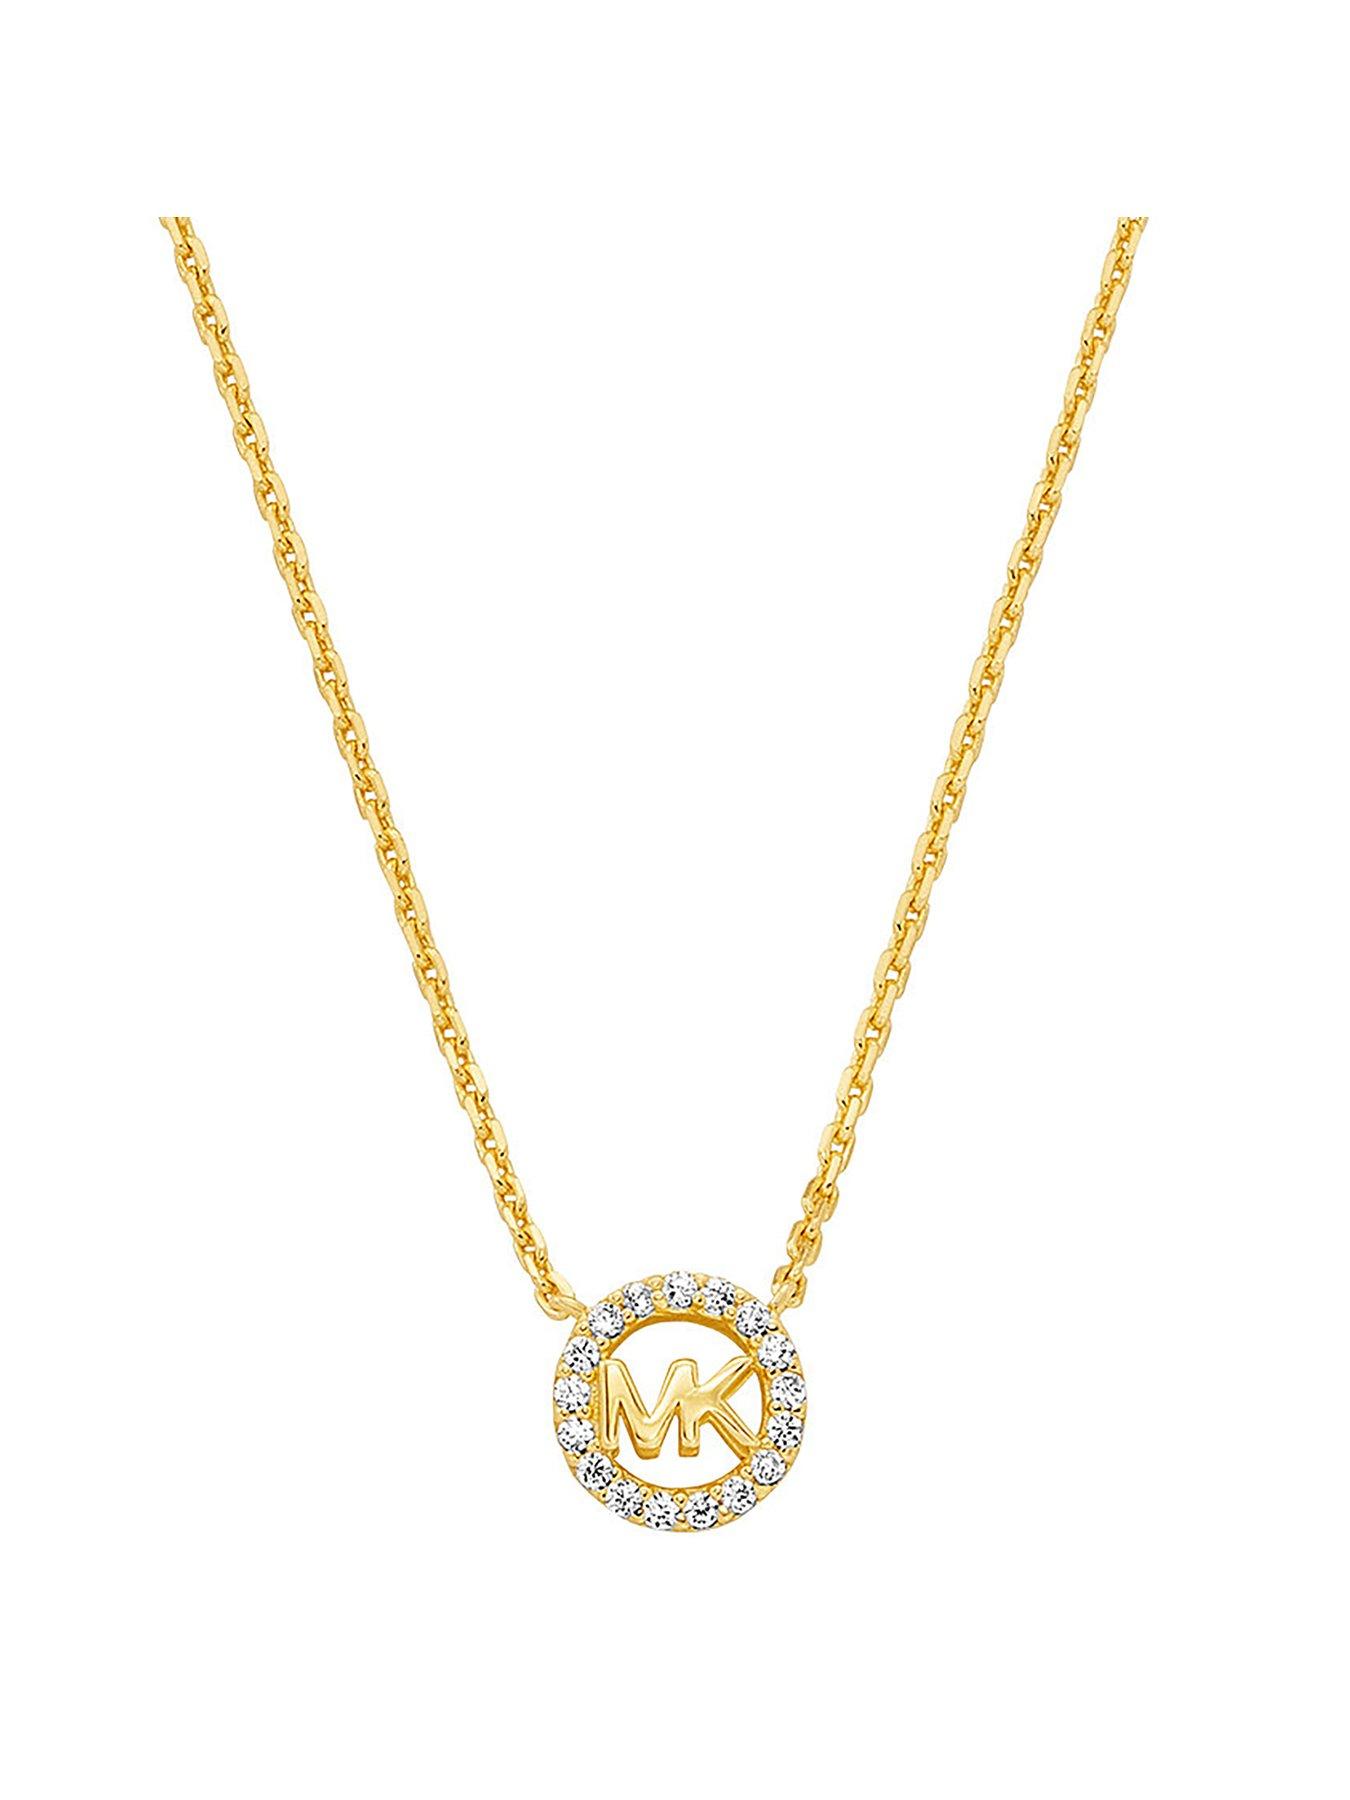 Gold Vermeil Carabiner Paperclip Necklace #paperclipnecklace #yanyaje... |  TikTok